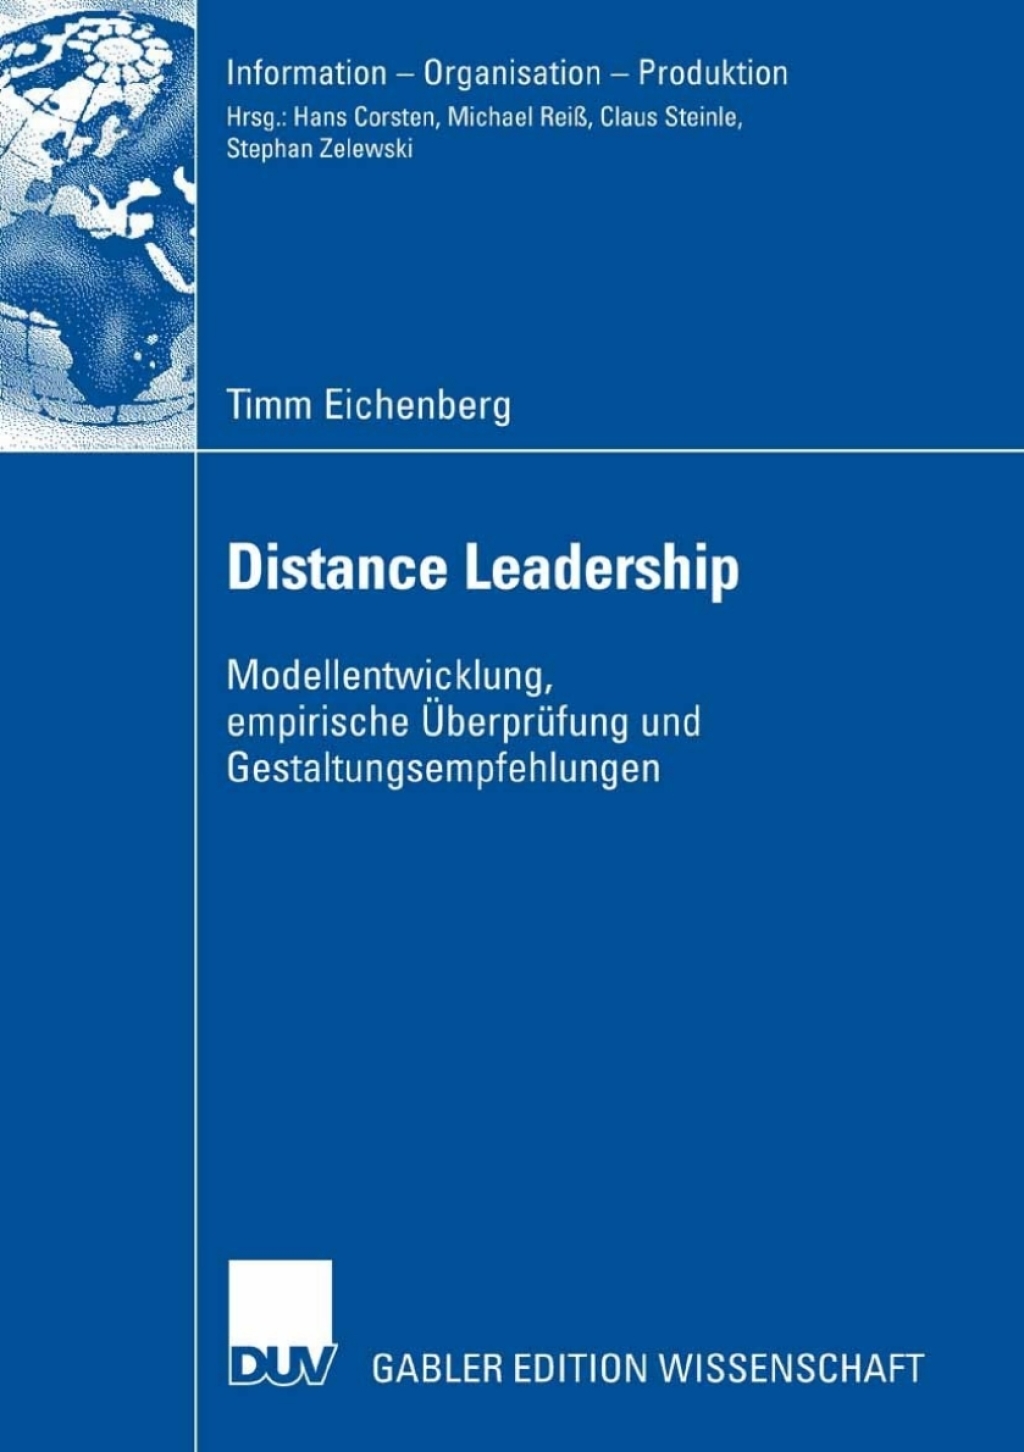 ISBN 9783835008212 product image for Distance Leadership (eBook Rental) | upcitemdb.com